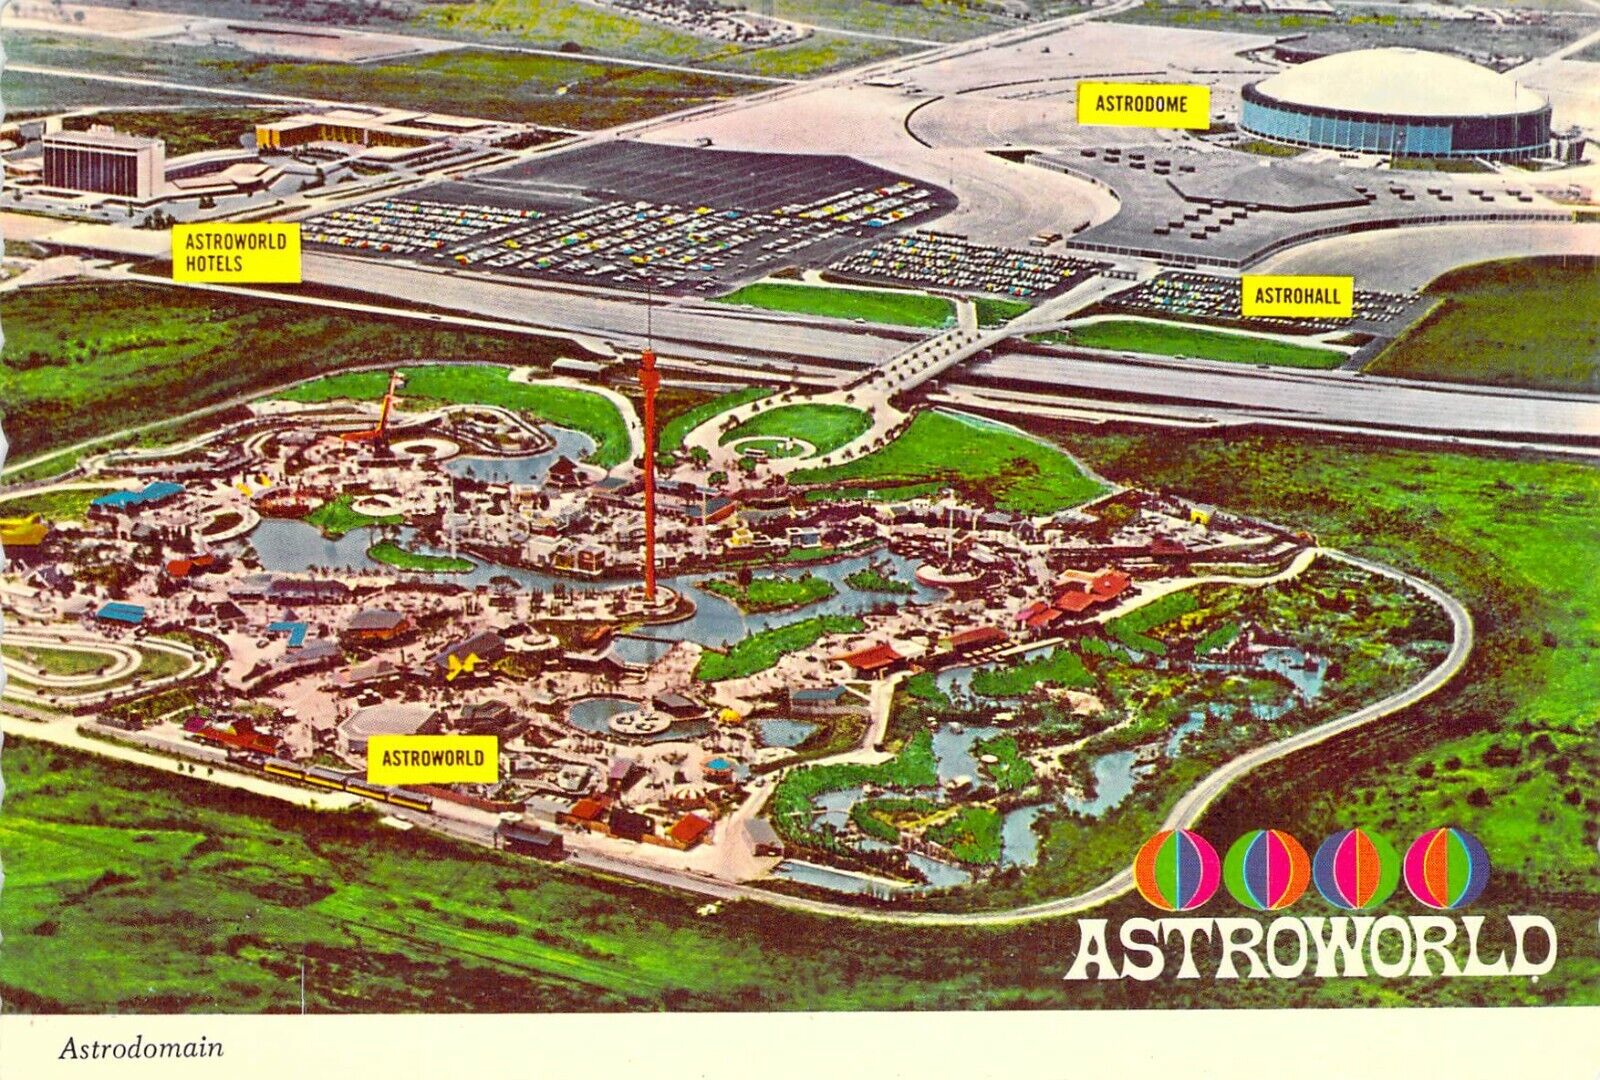 1970 TX Houston ASTROWORLD Astrodomain AERIAL VIEW  MINT 4x6 postcard